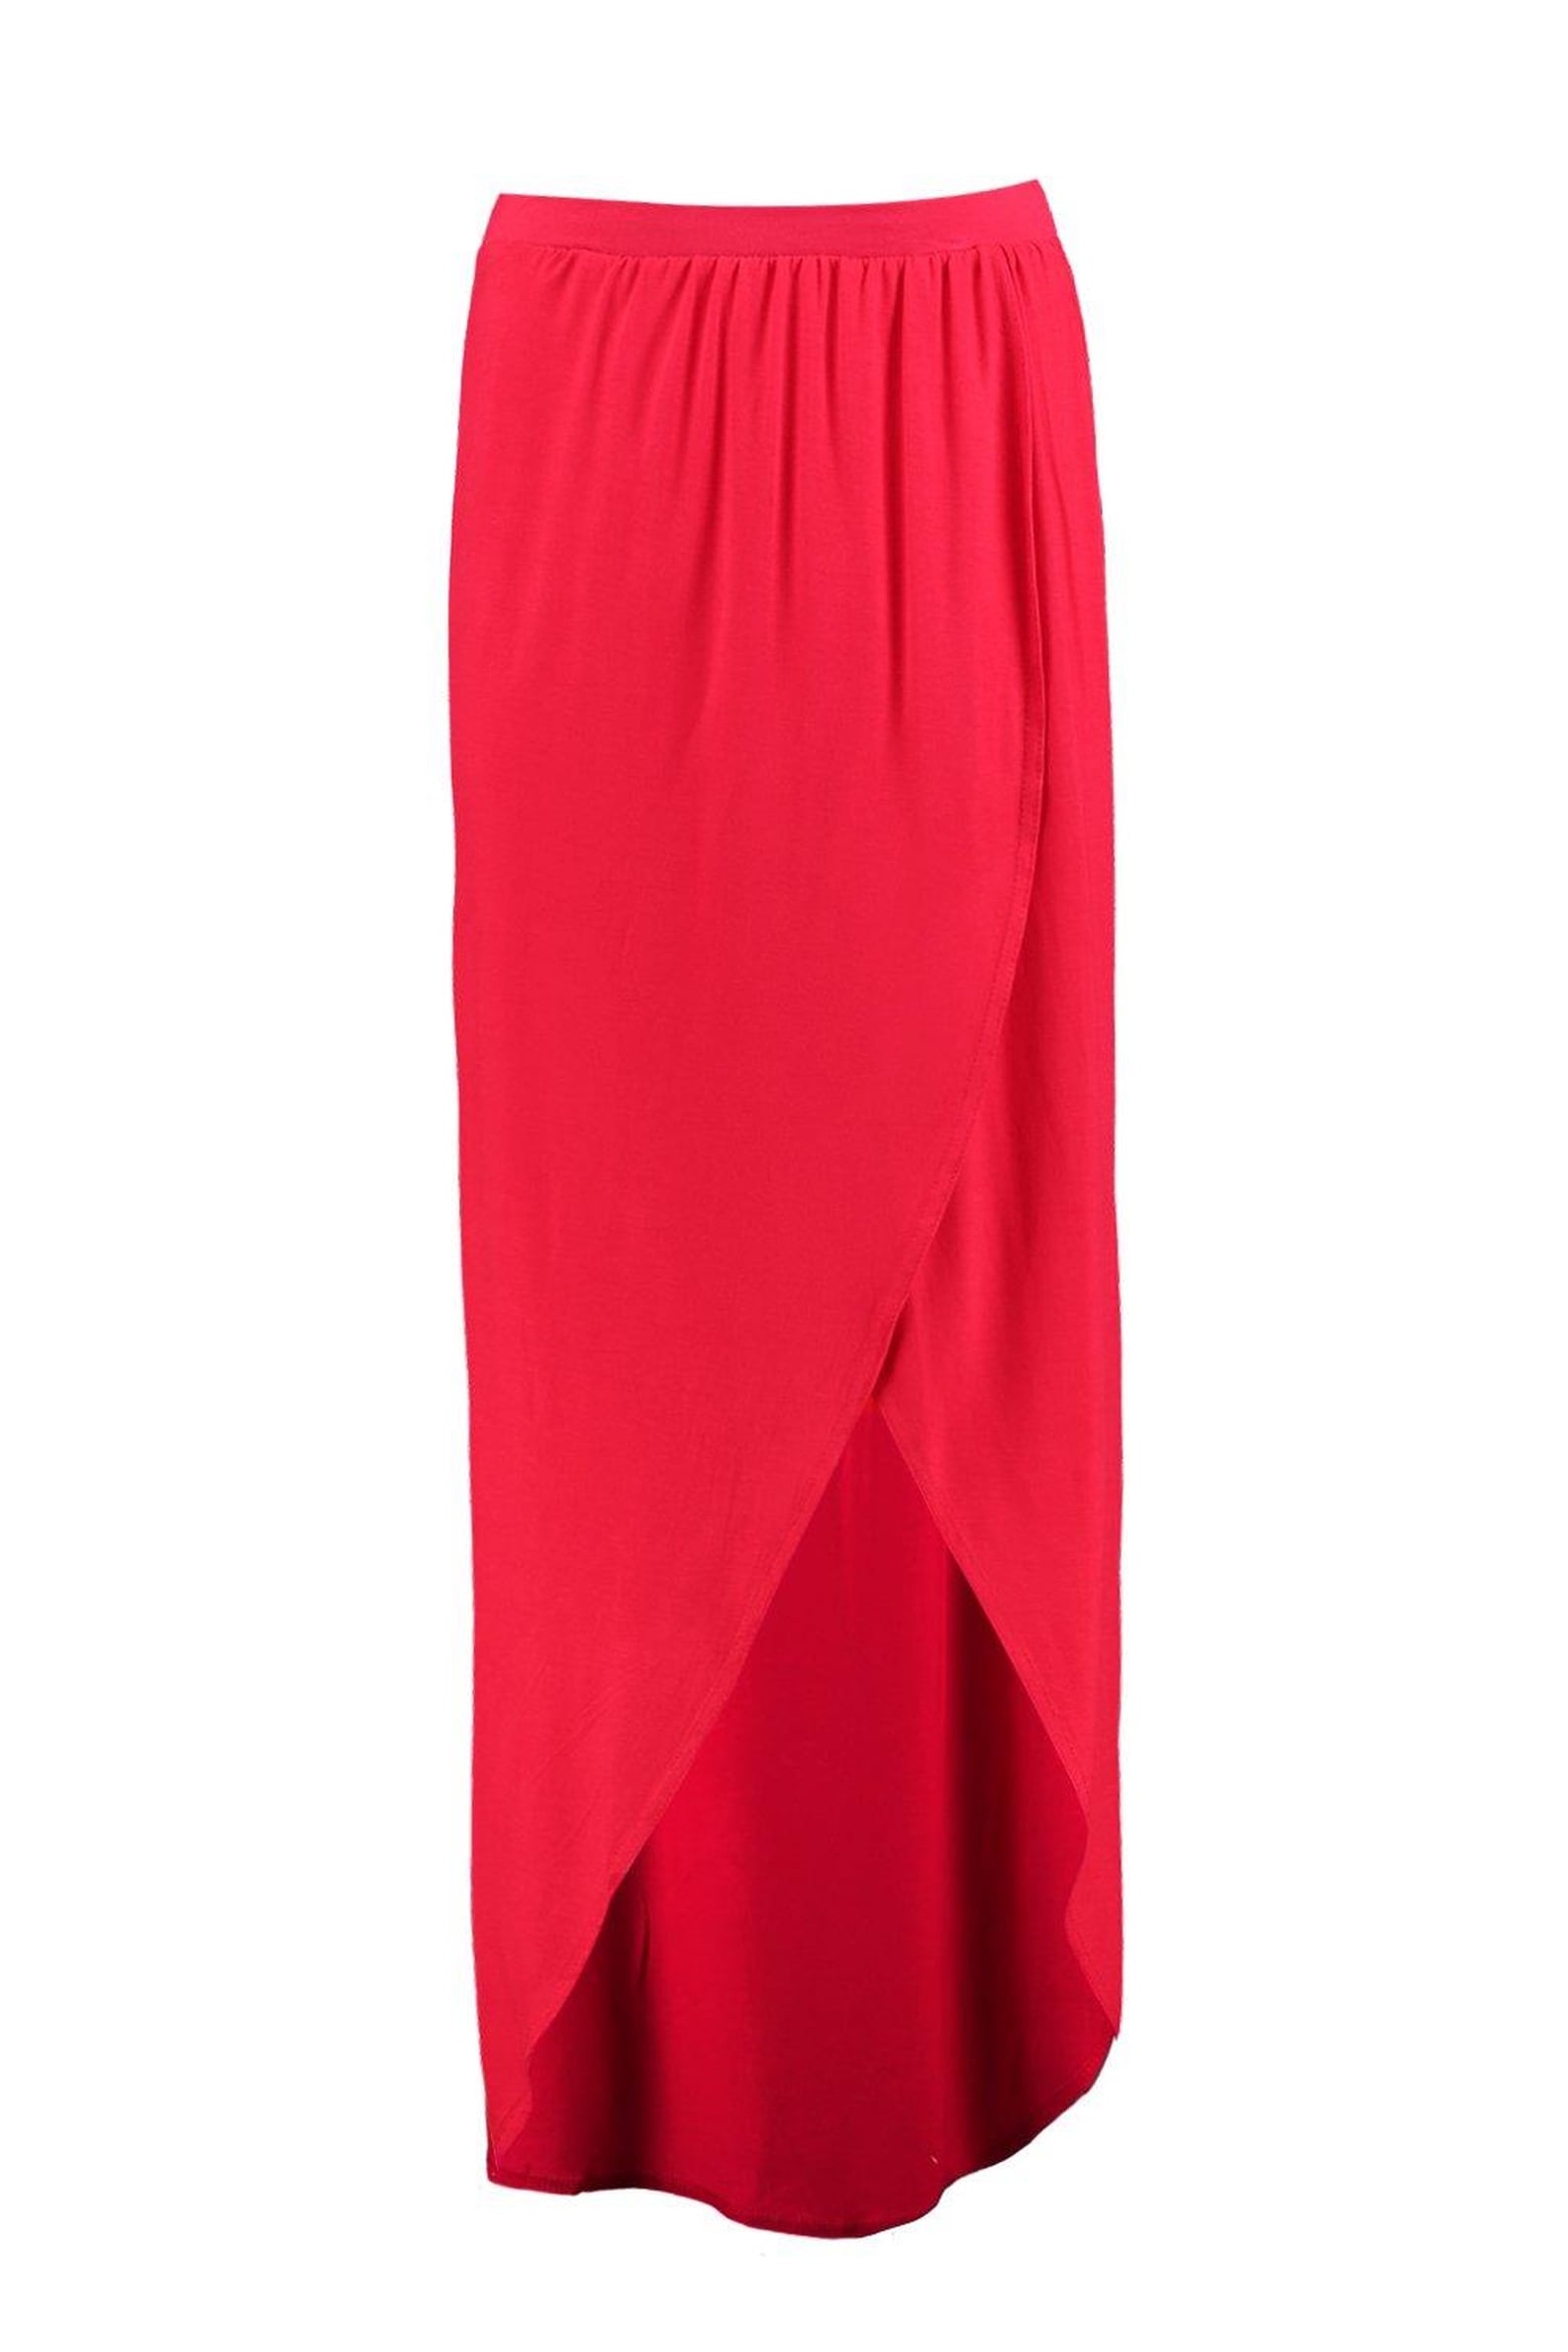 Selena Gomez Wearing a Red Wrap Skirt | POPSUGAR Fashion